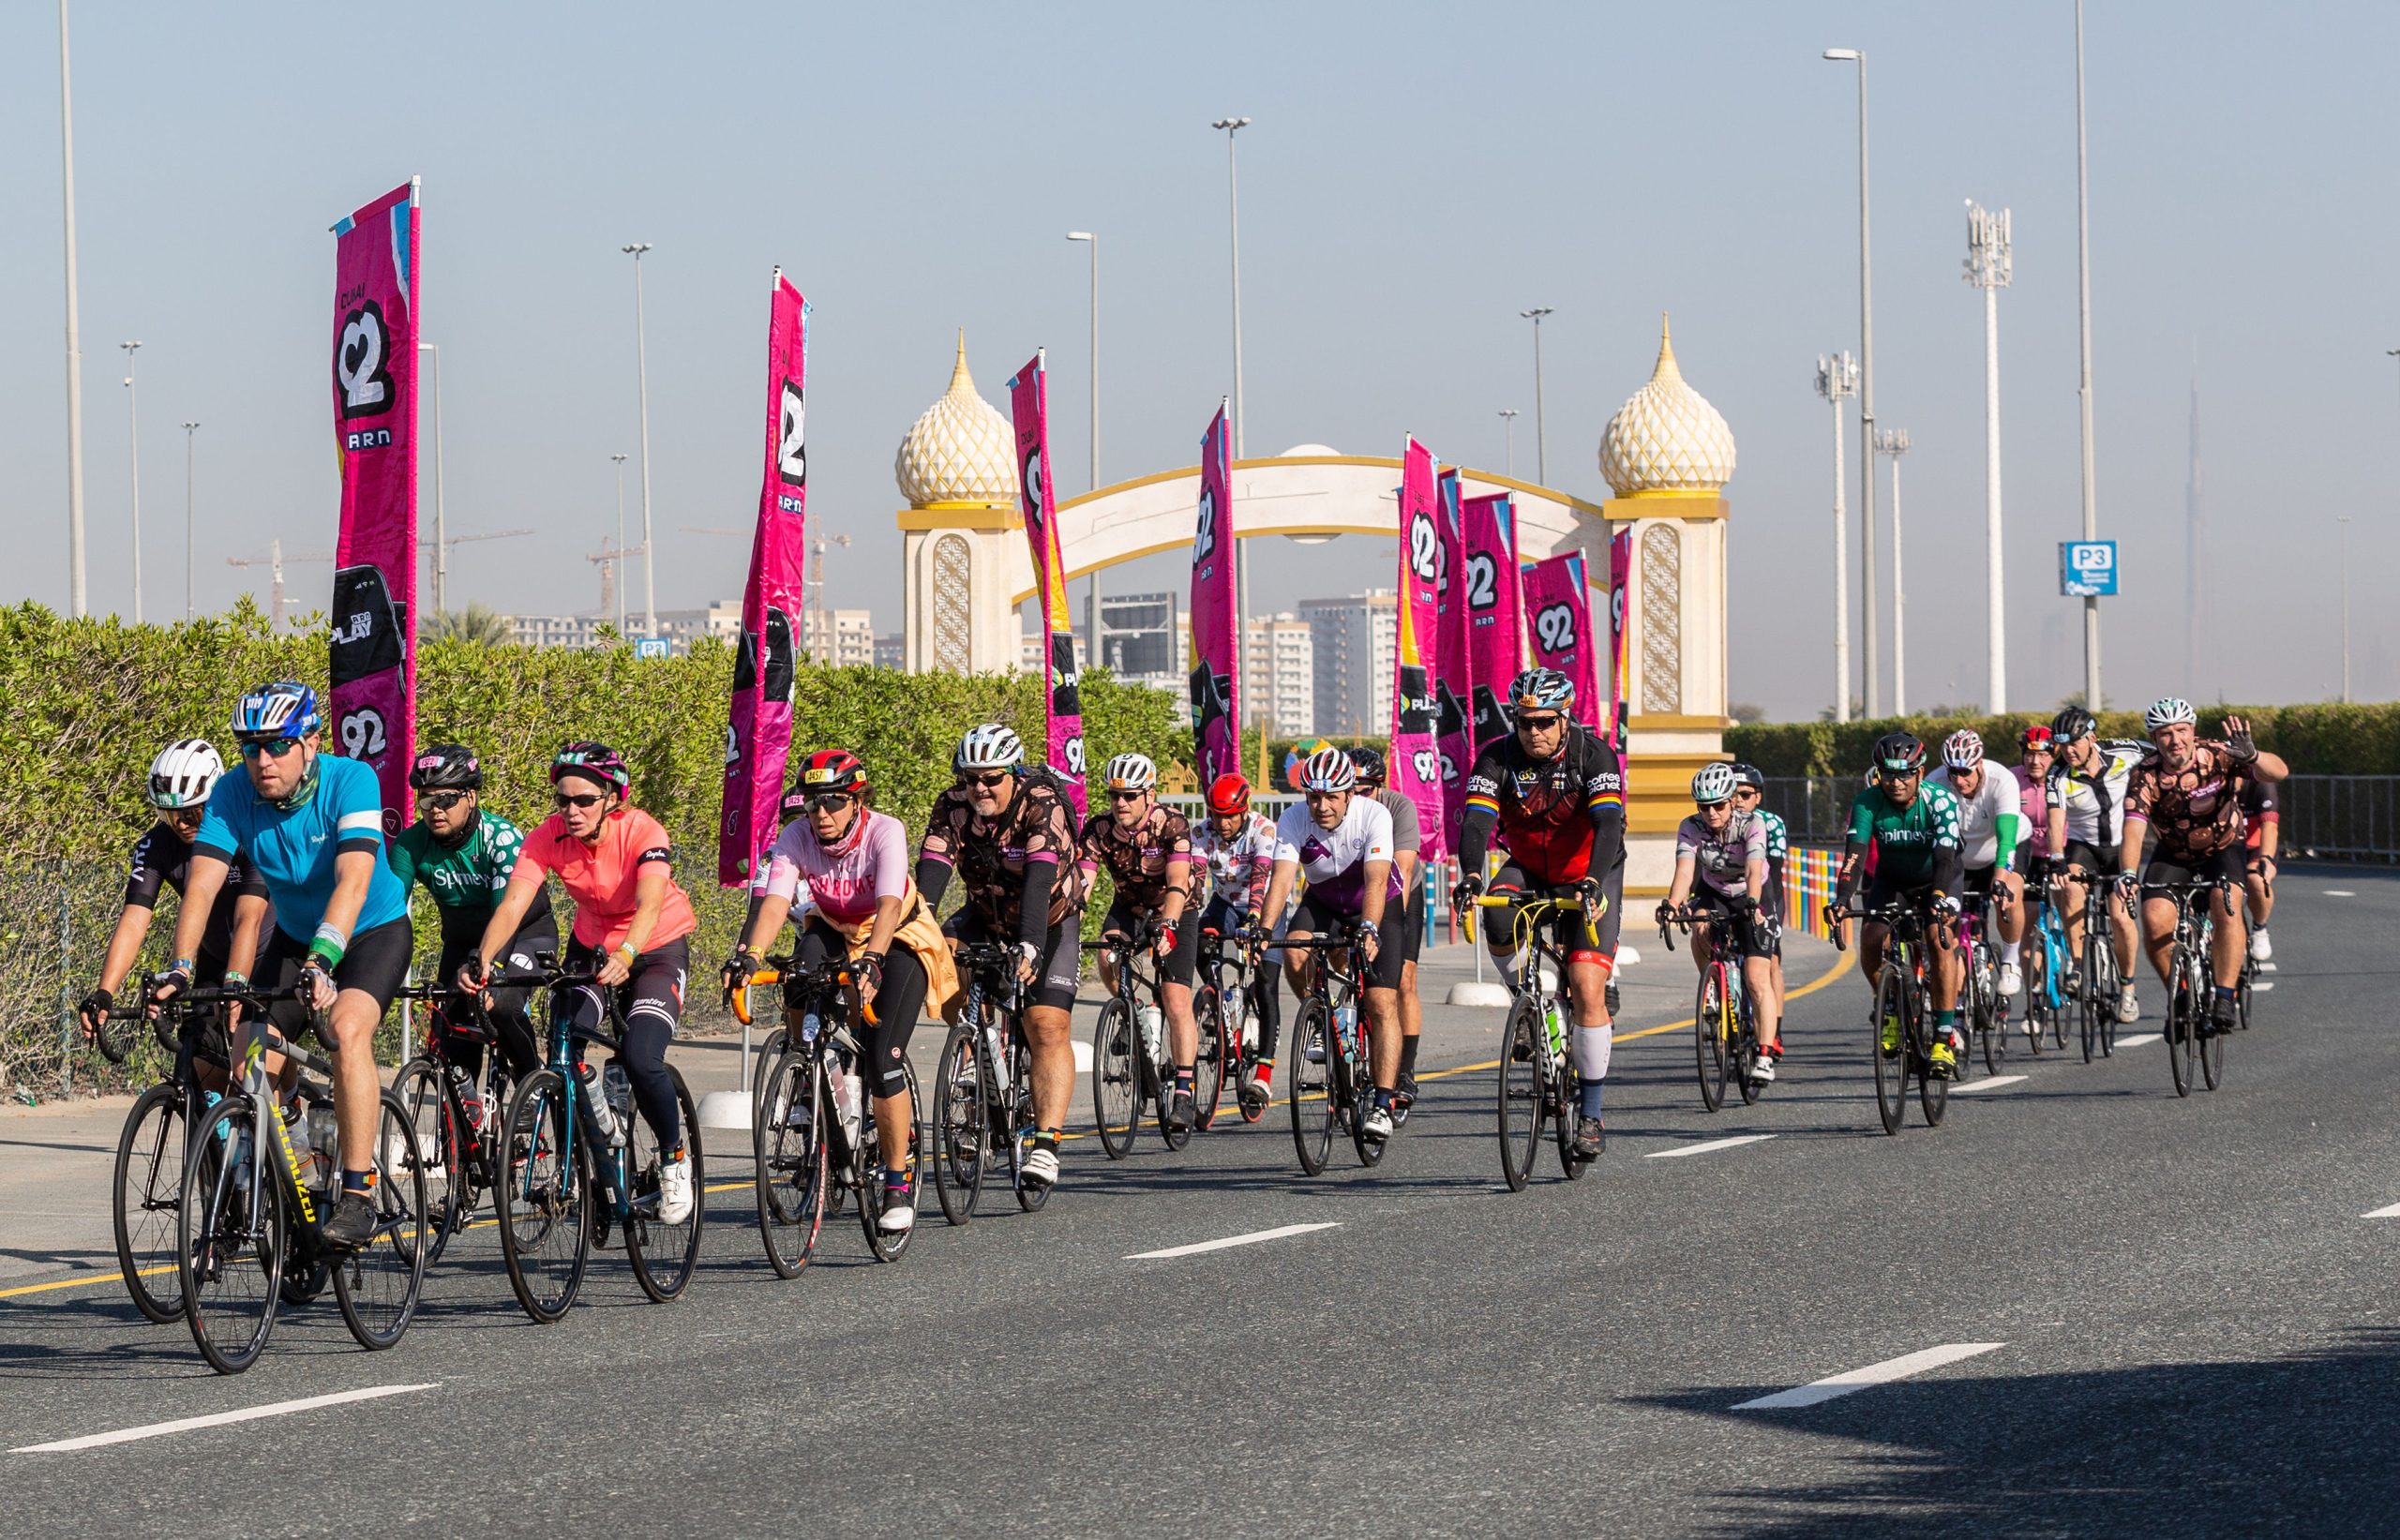 Cyclists in the Spinneys Dubai 92